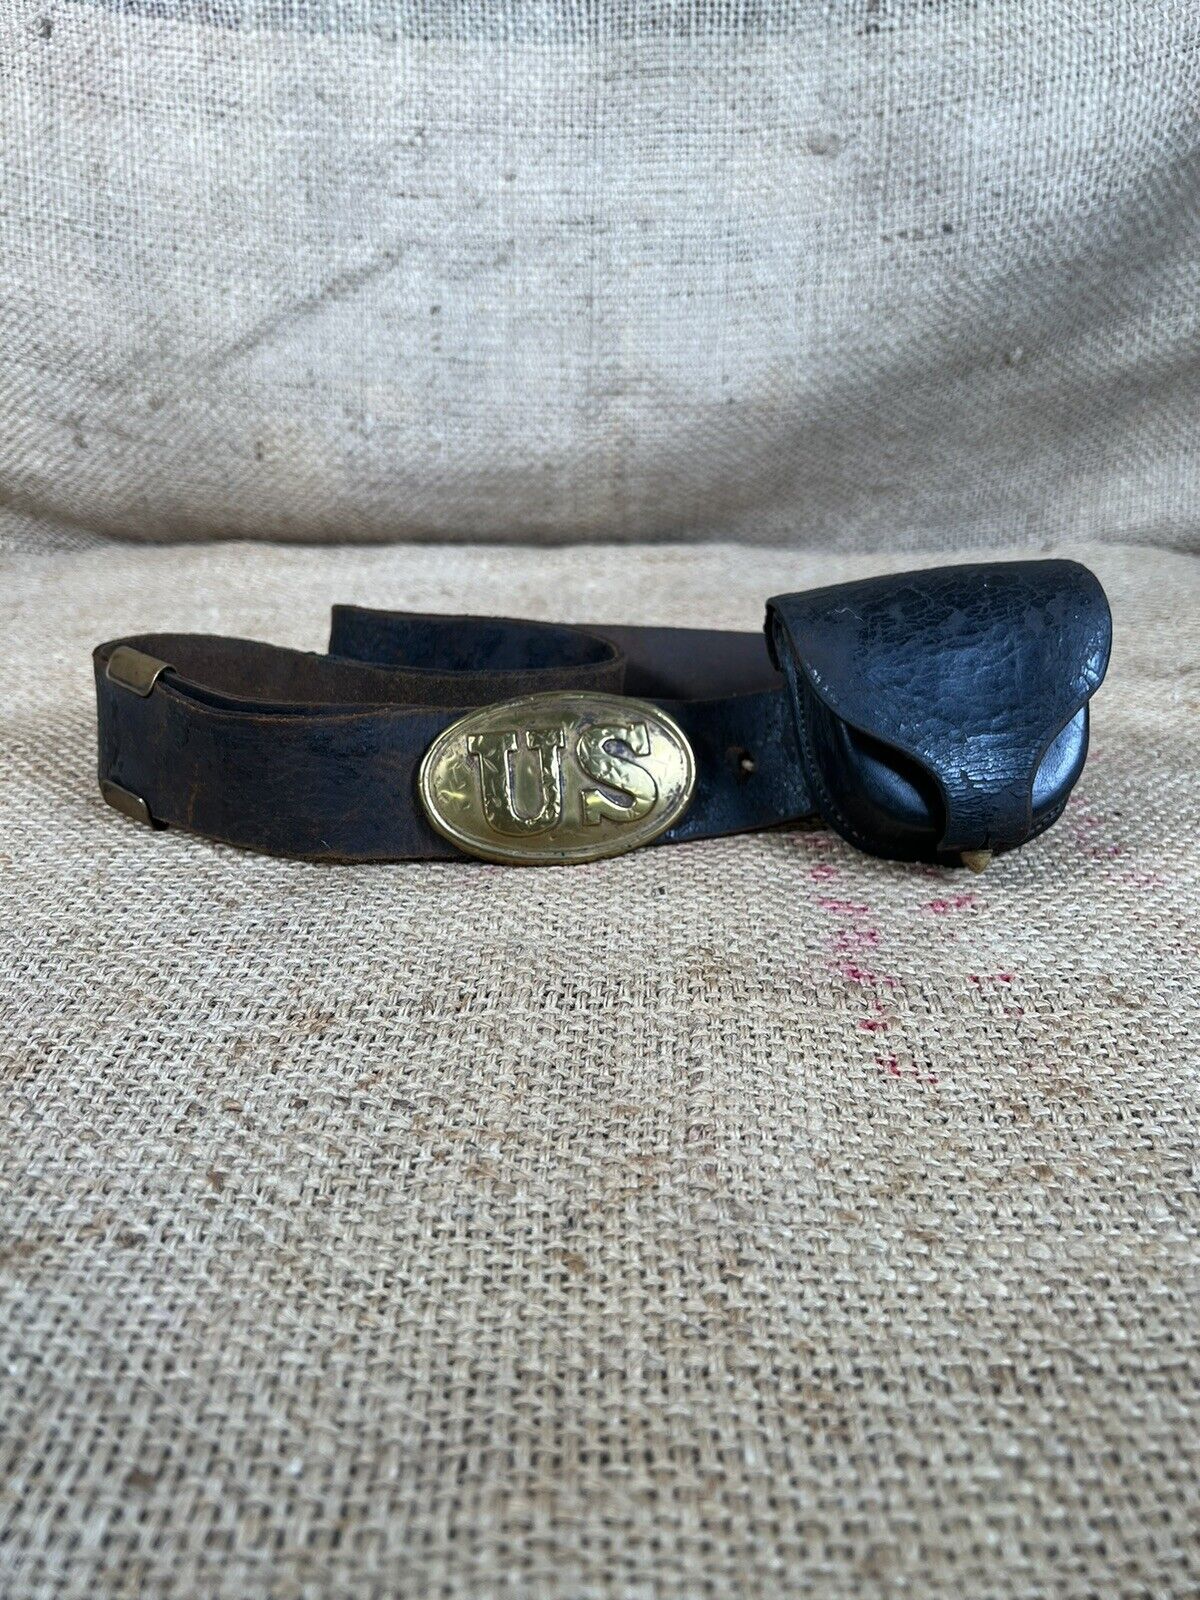 Civil War Regulation Waist Belt and US Buckle with Cap Box